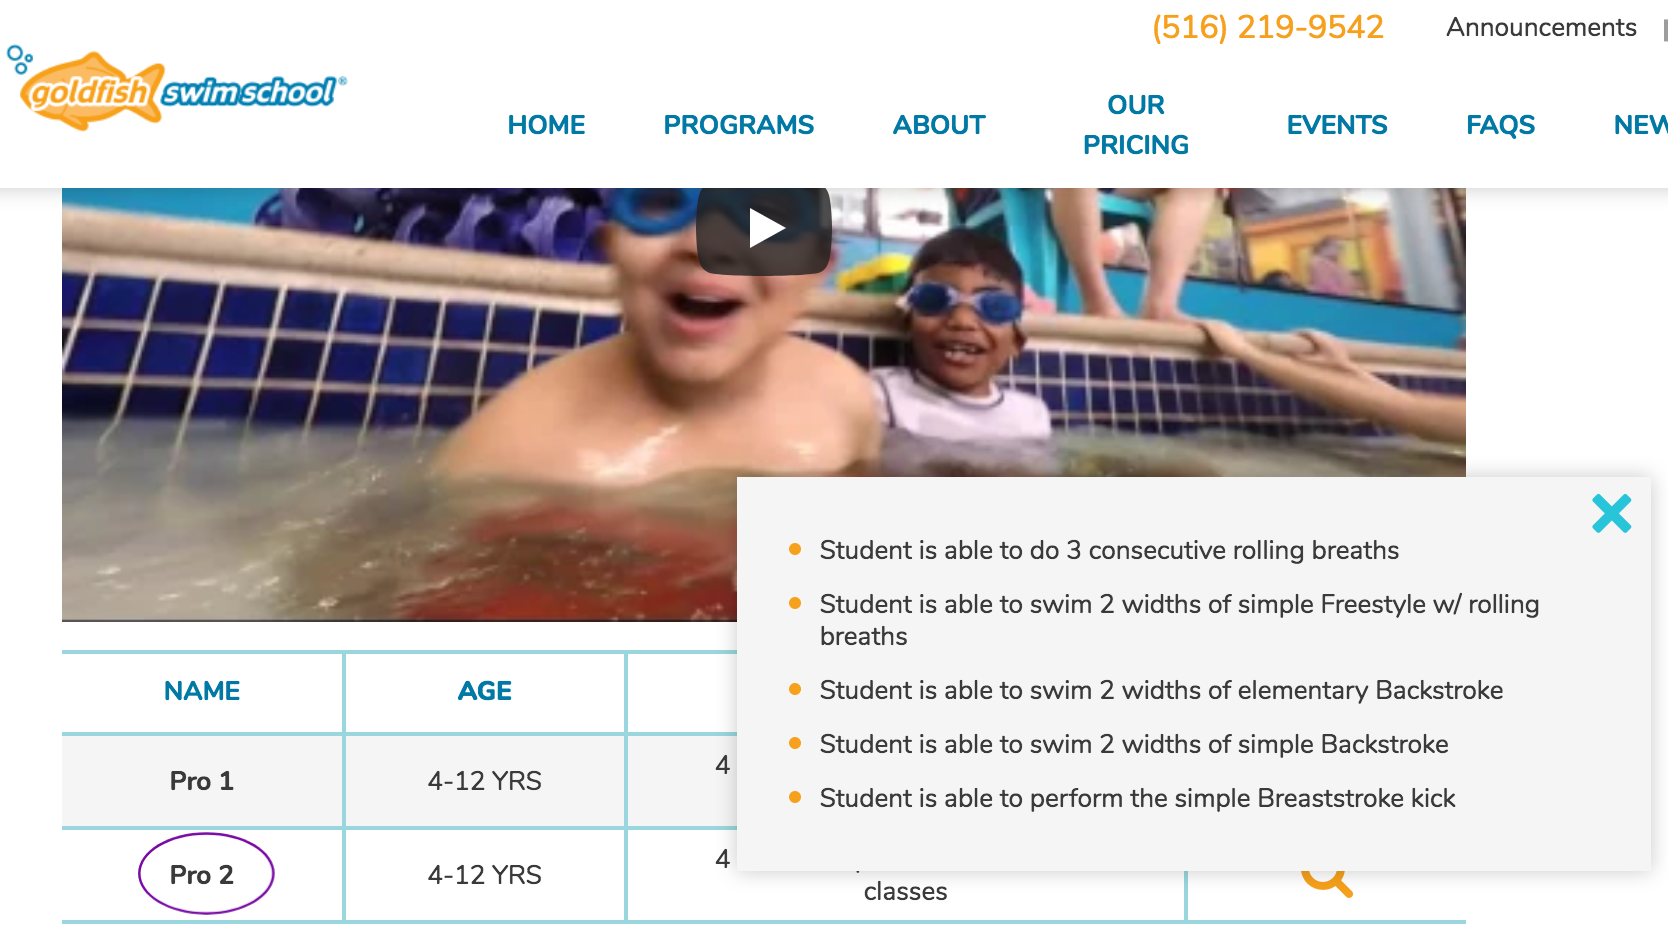 Goldfish Swim School Pro 2 Class Description.